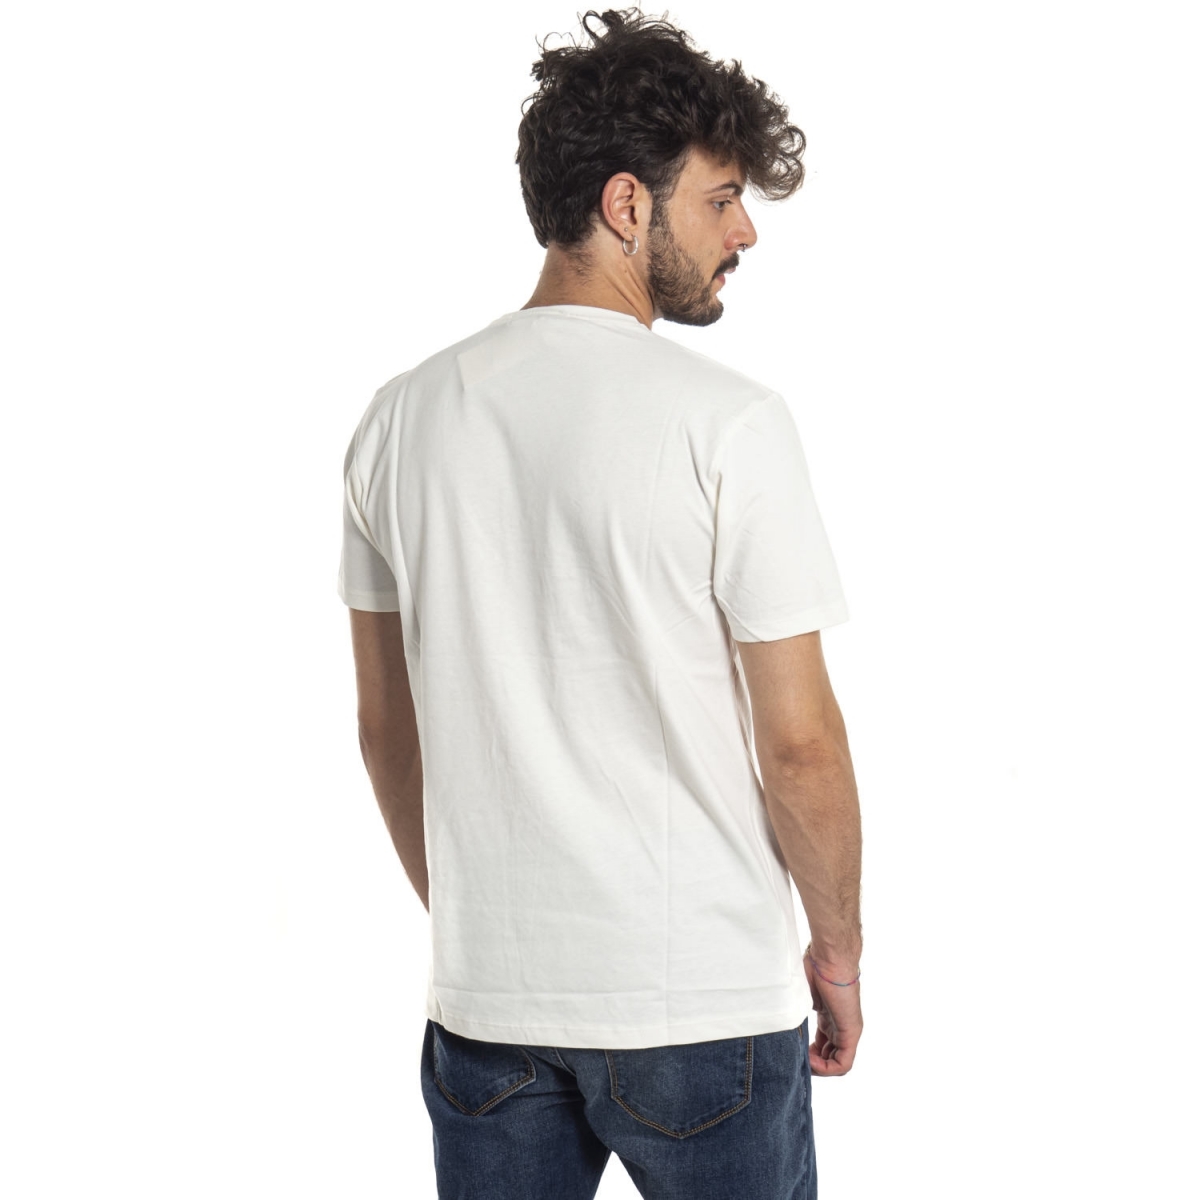 clothing T-shirt men T-Shirt LPX16-29 LANDEK PARK Cafedelmar Shop